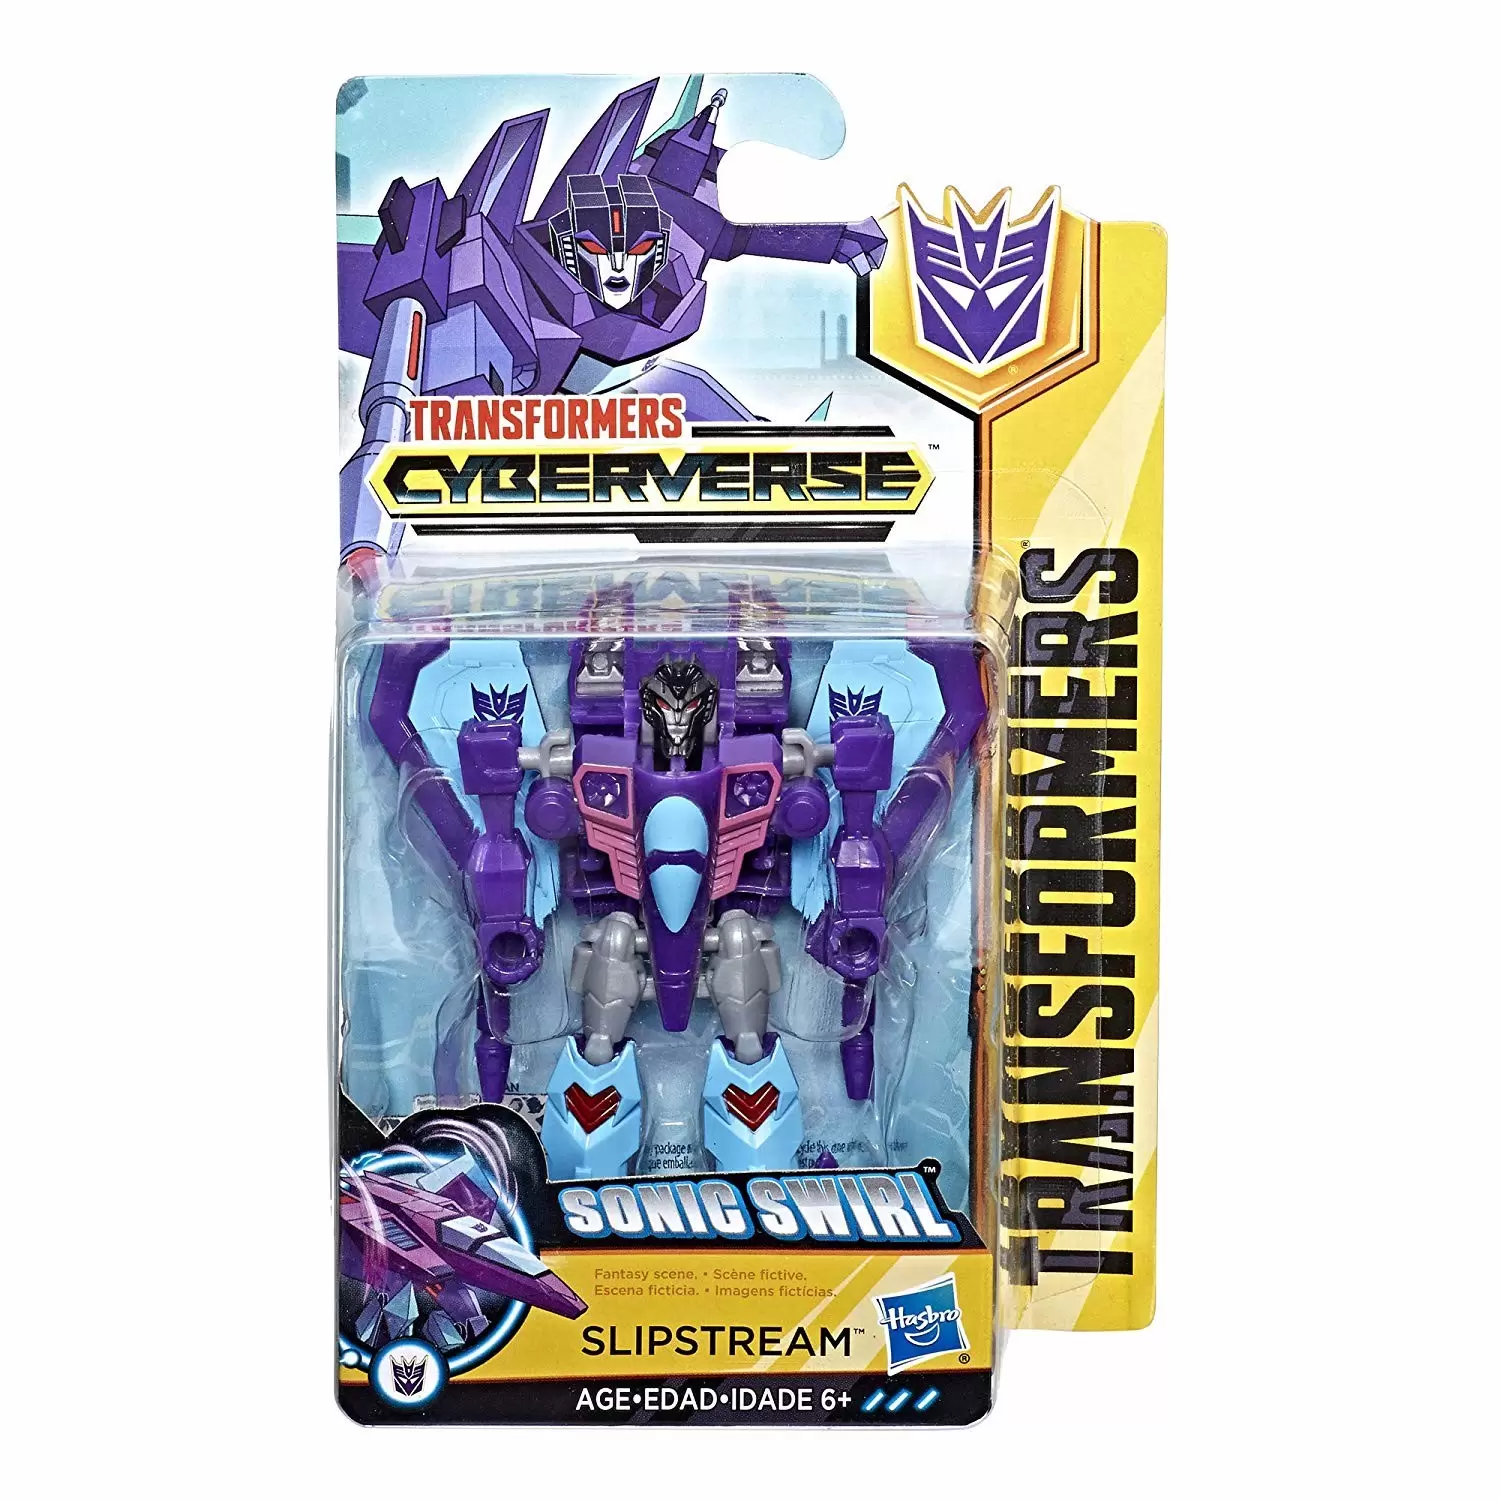 Transformers Cyberverse - Slipstream